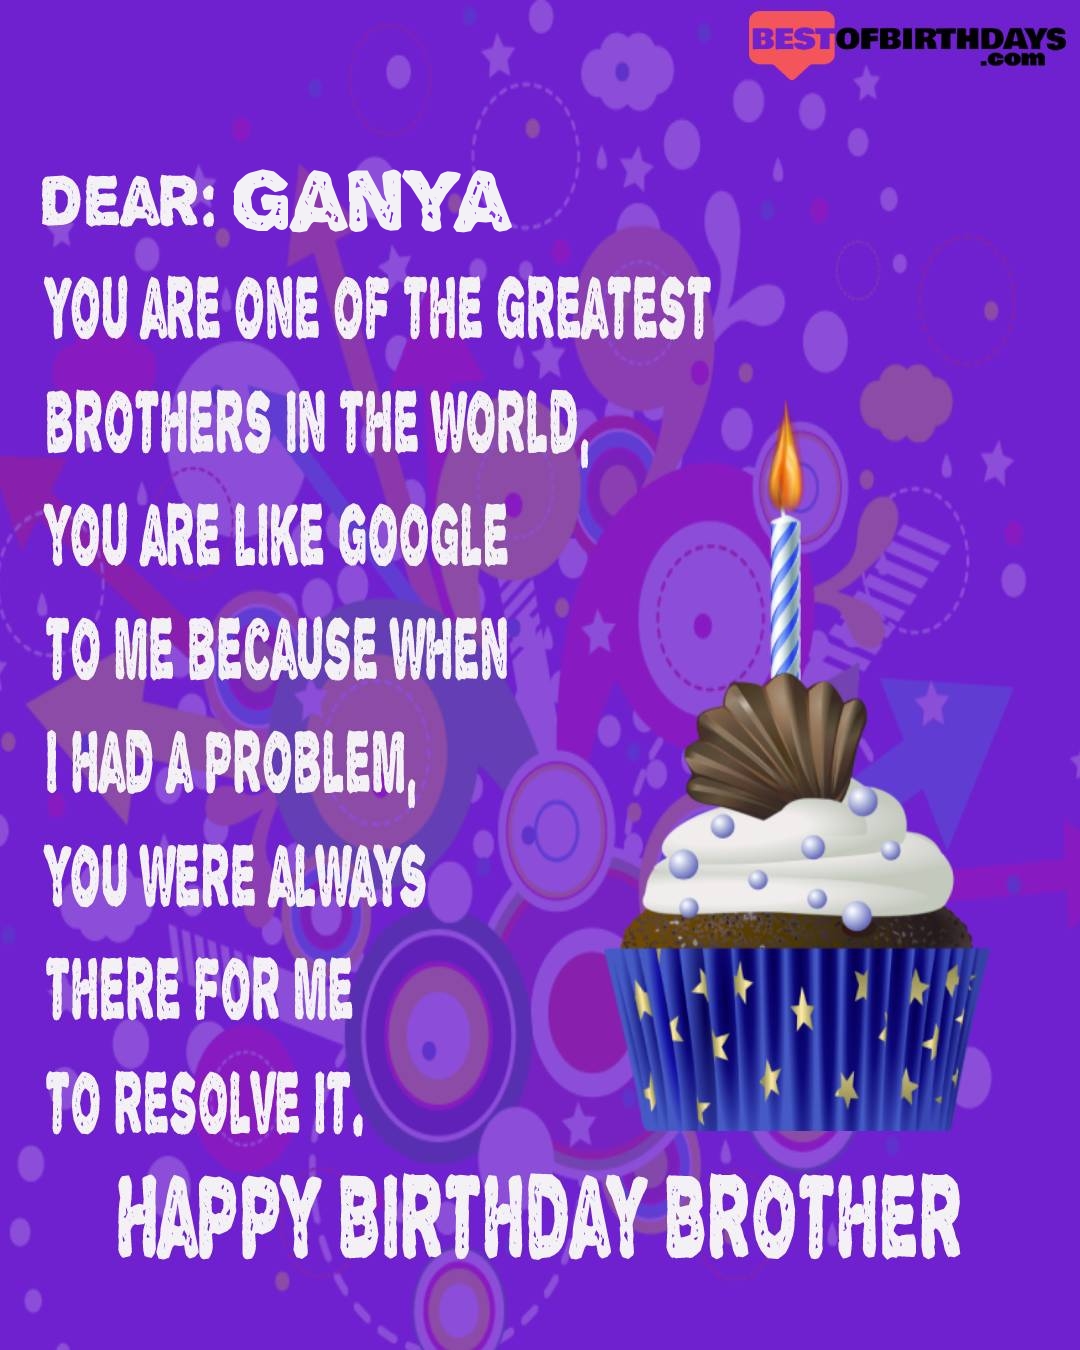 Happy birthday ganya bhai brother bro